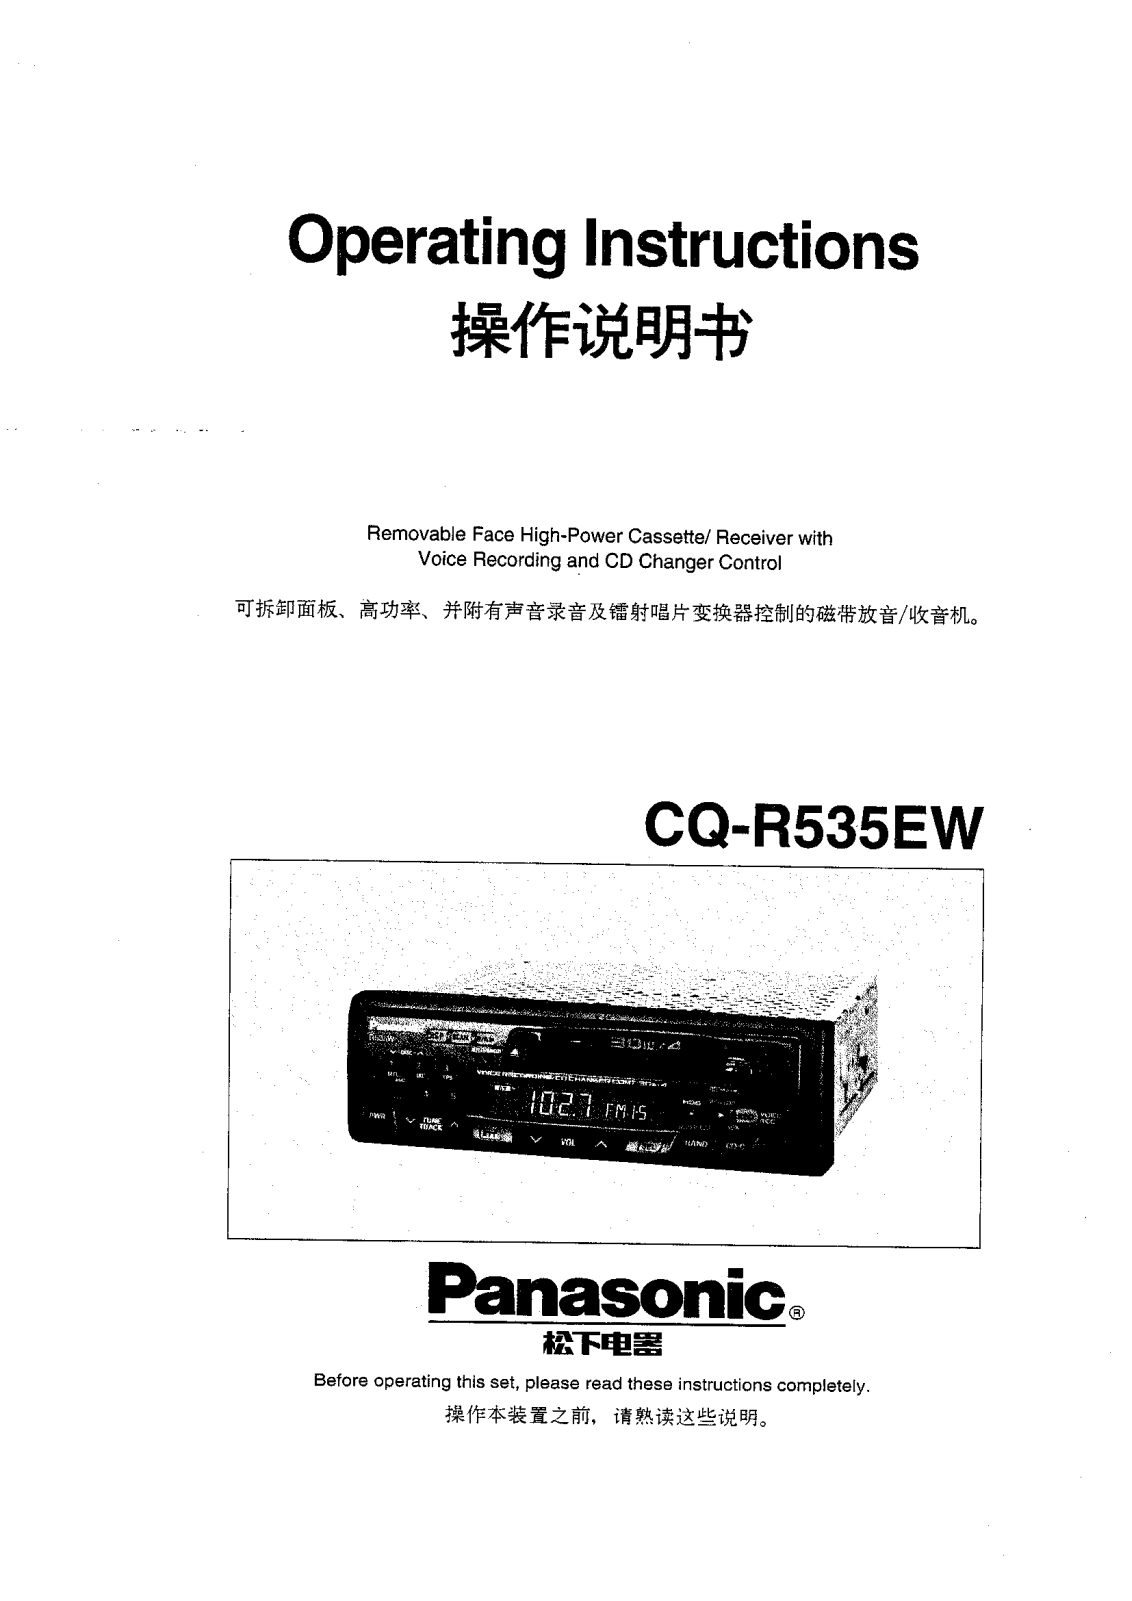 Panasonic CQ-R535EW Operating Instructions